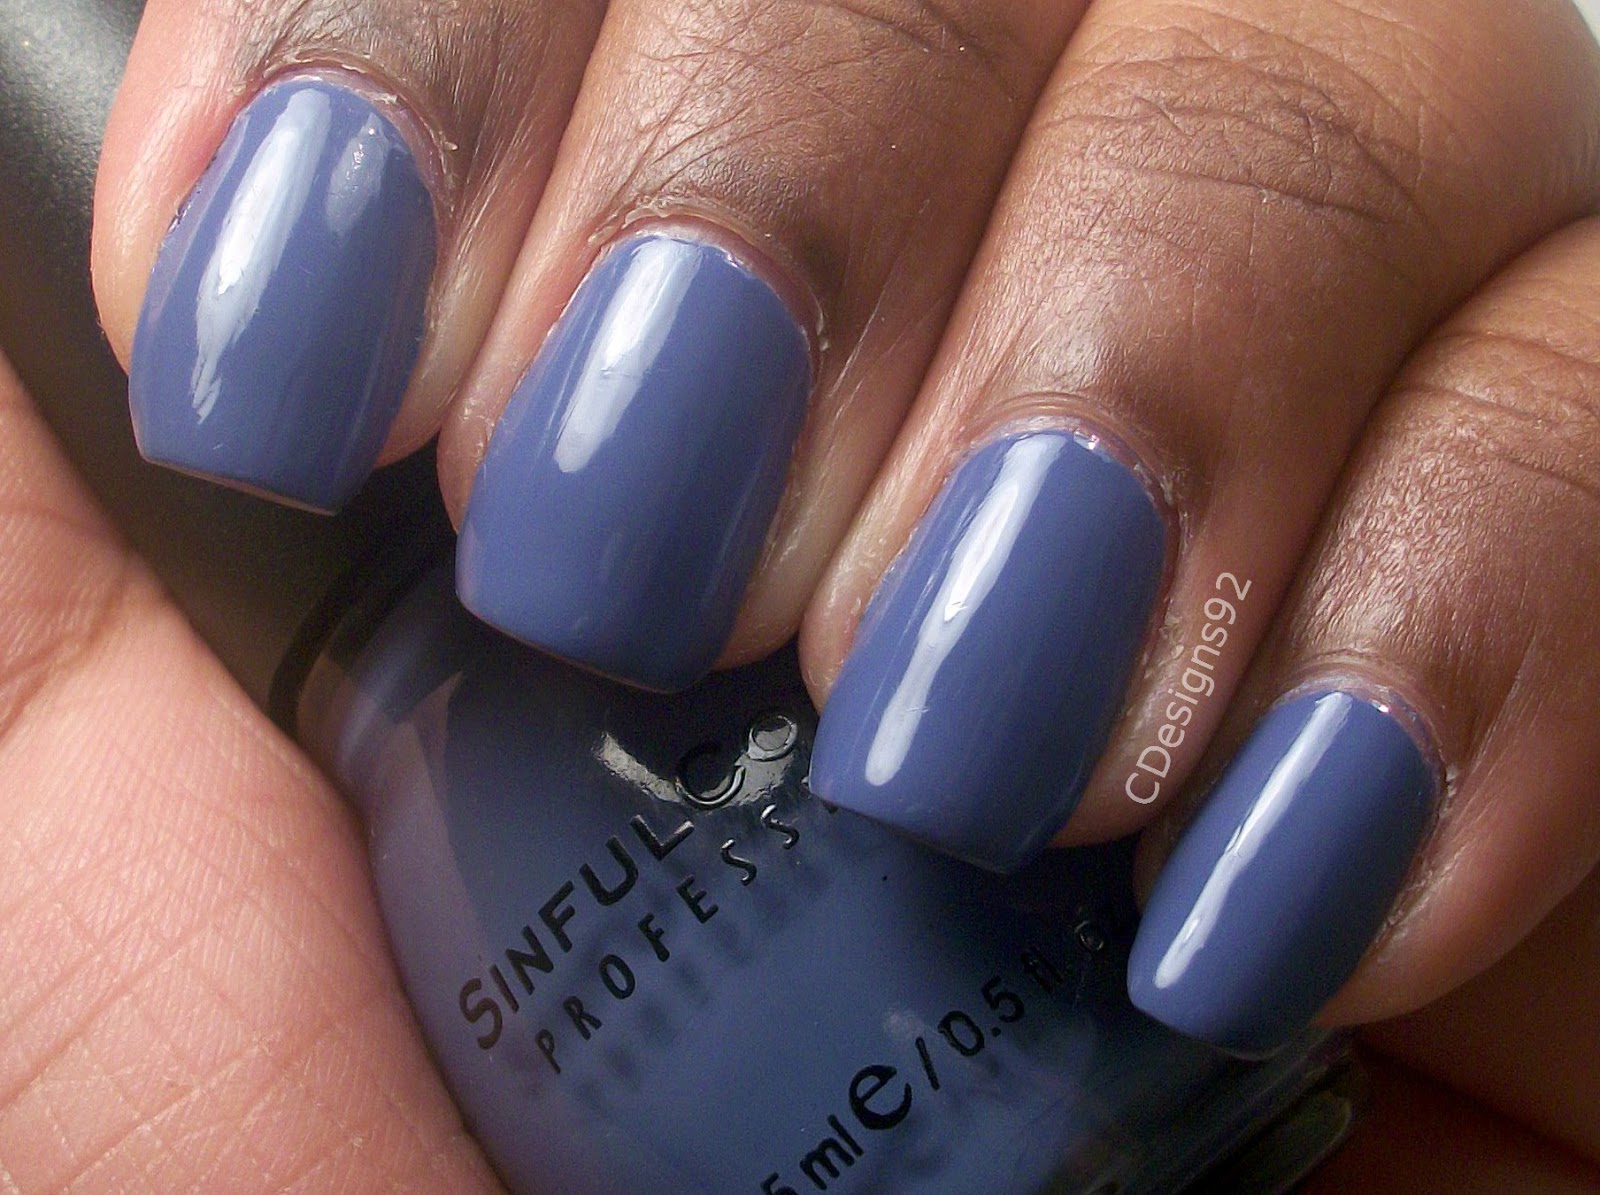 Happy Skin Nail Polish in "Lavender Love" shade - wide 6